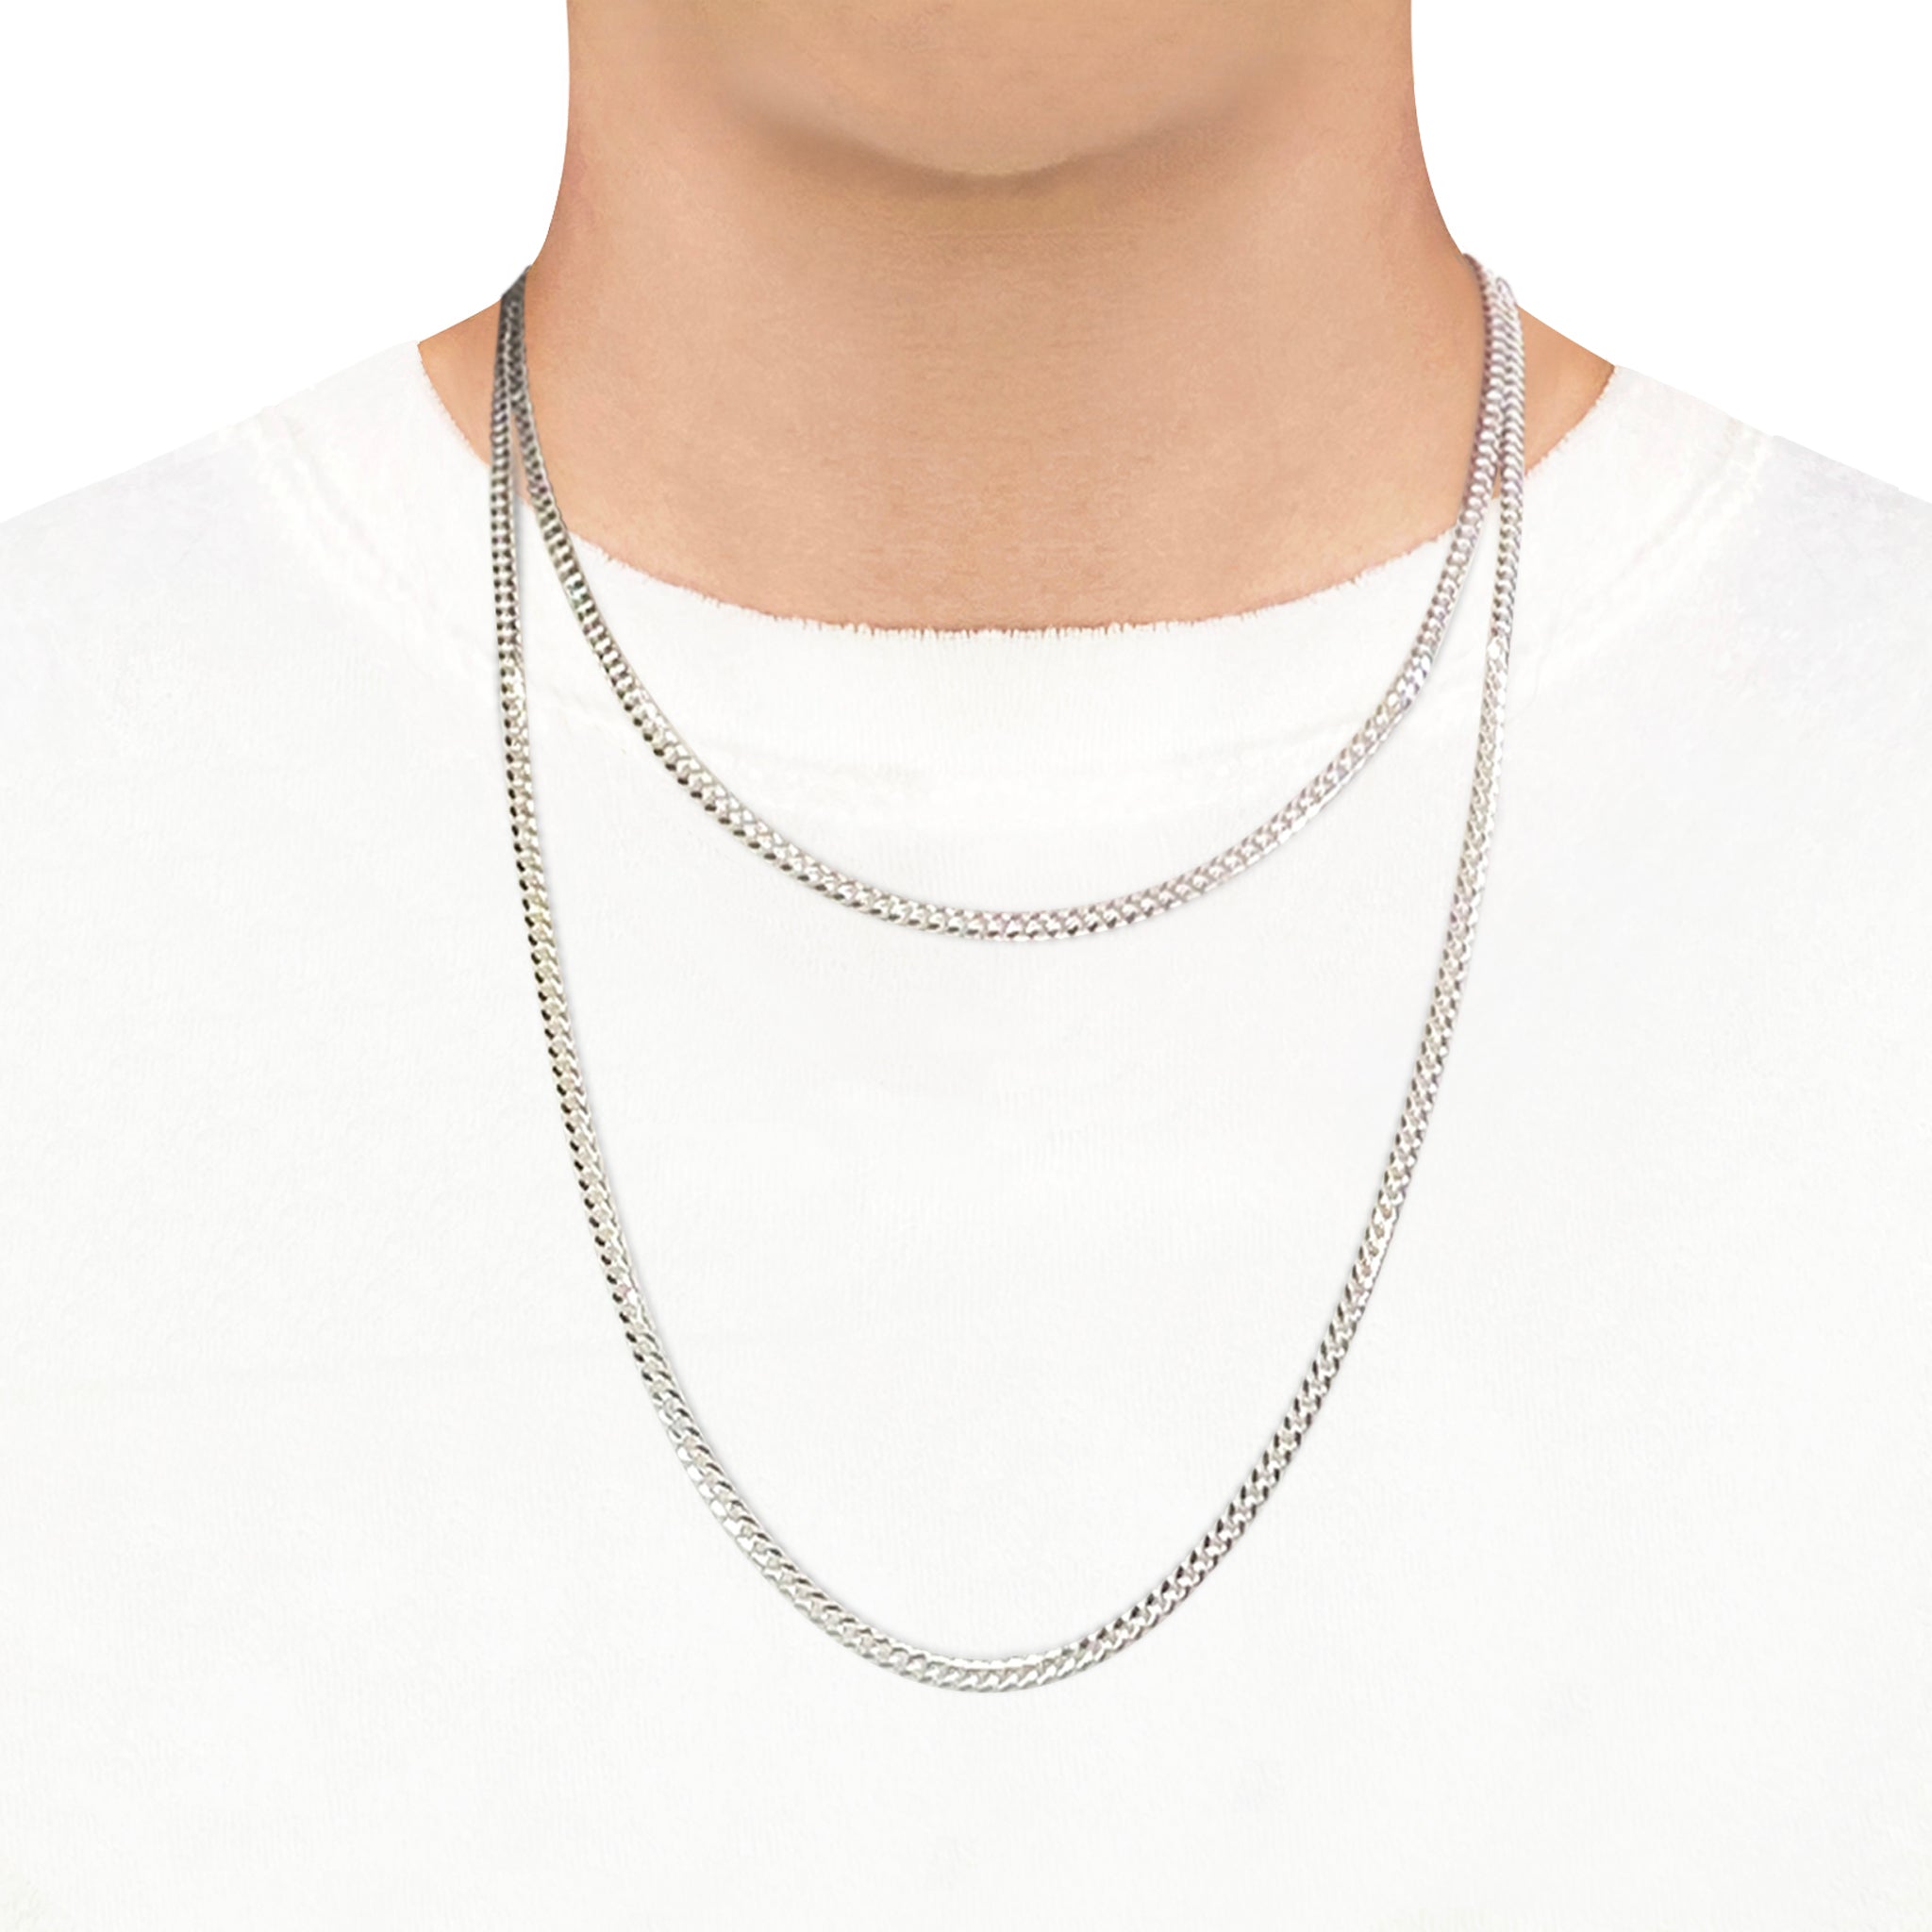 3.5mm Miami Curb Chain Necklace